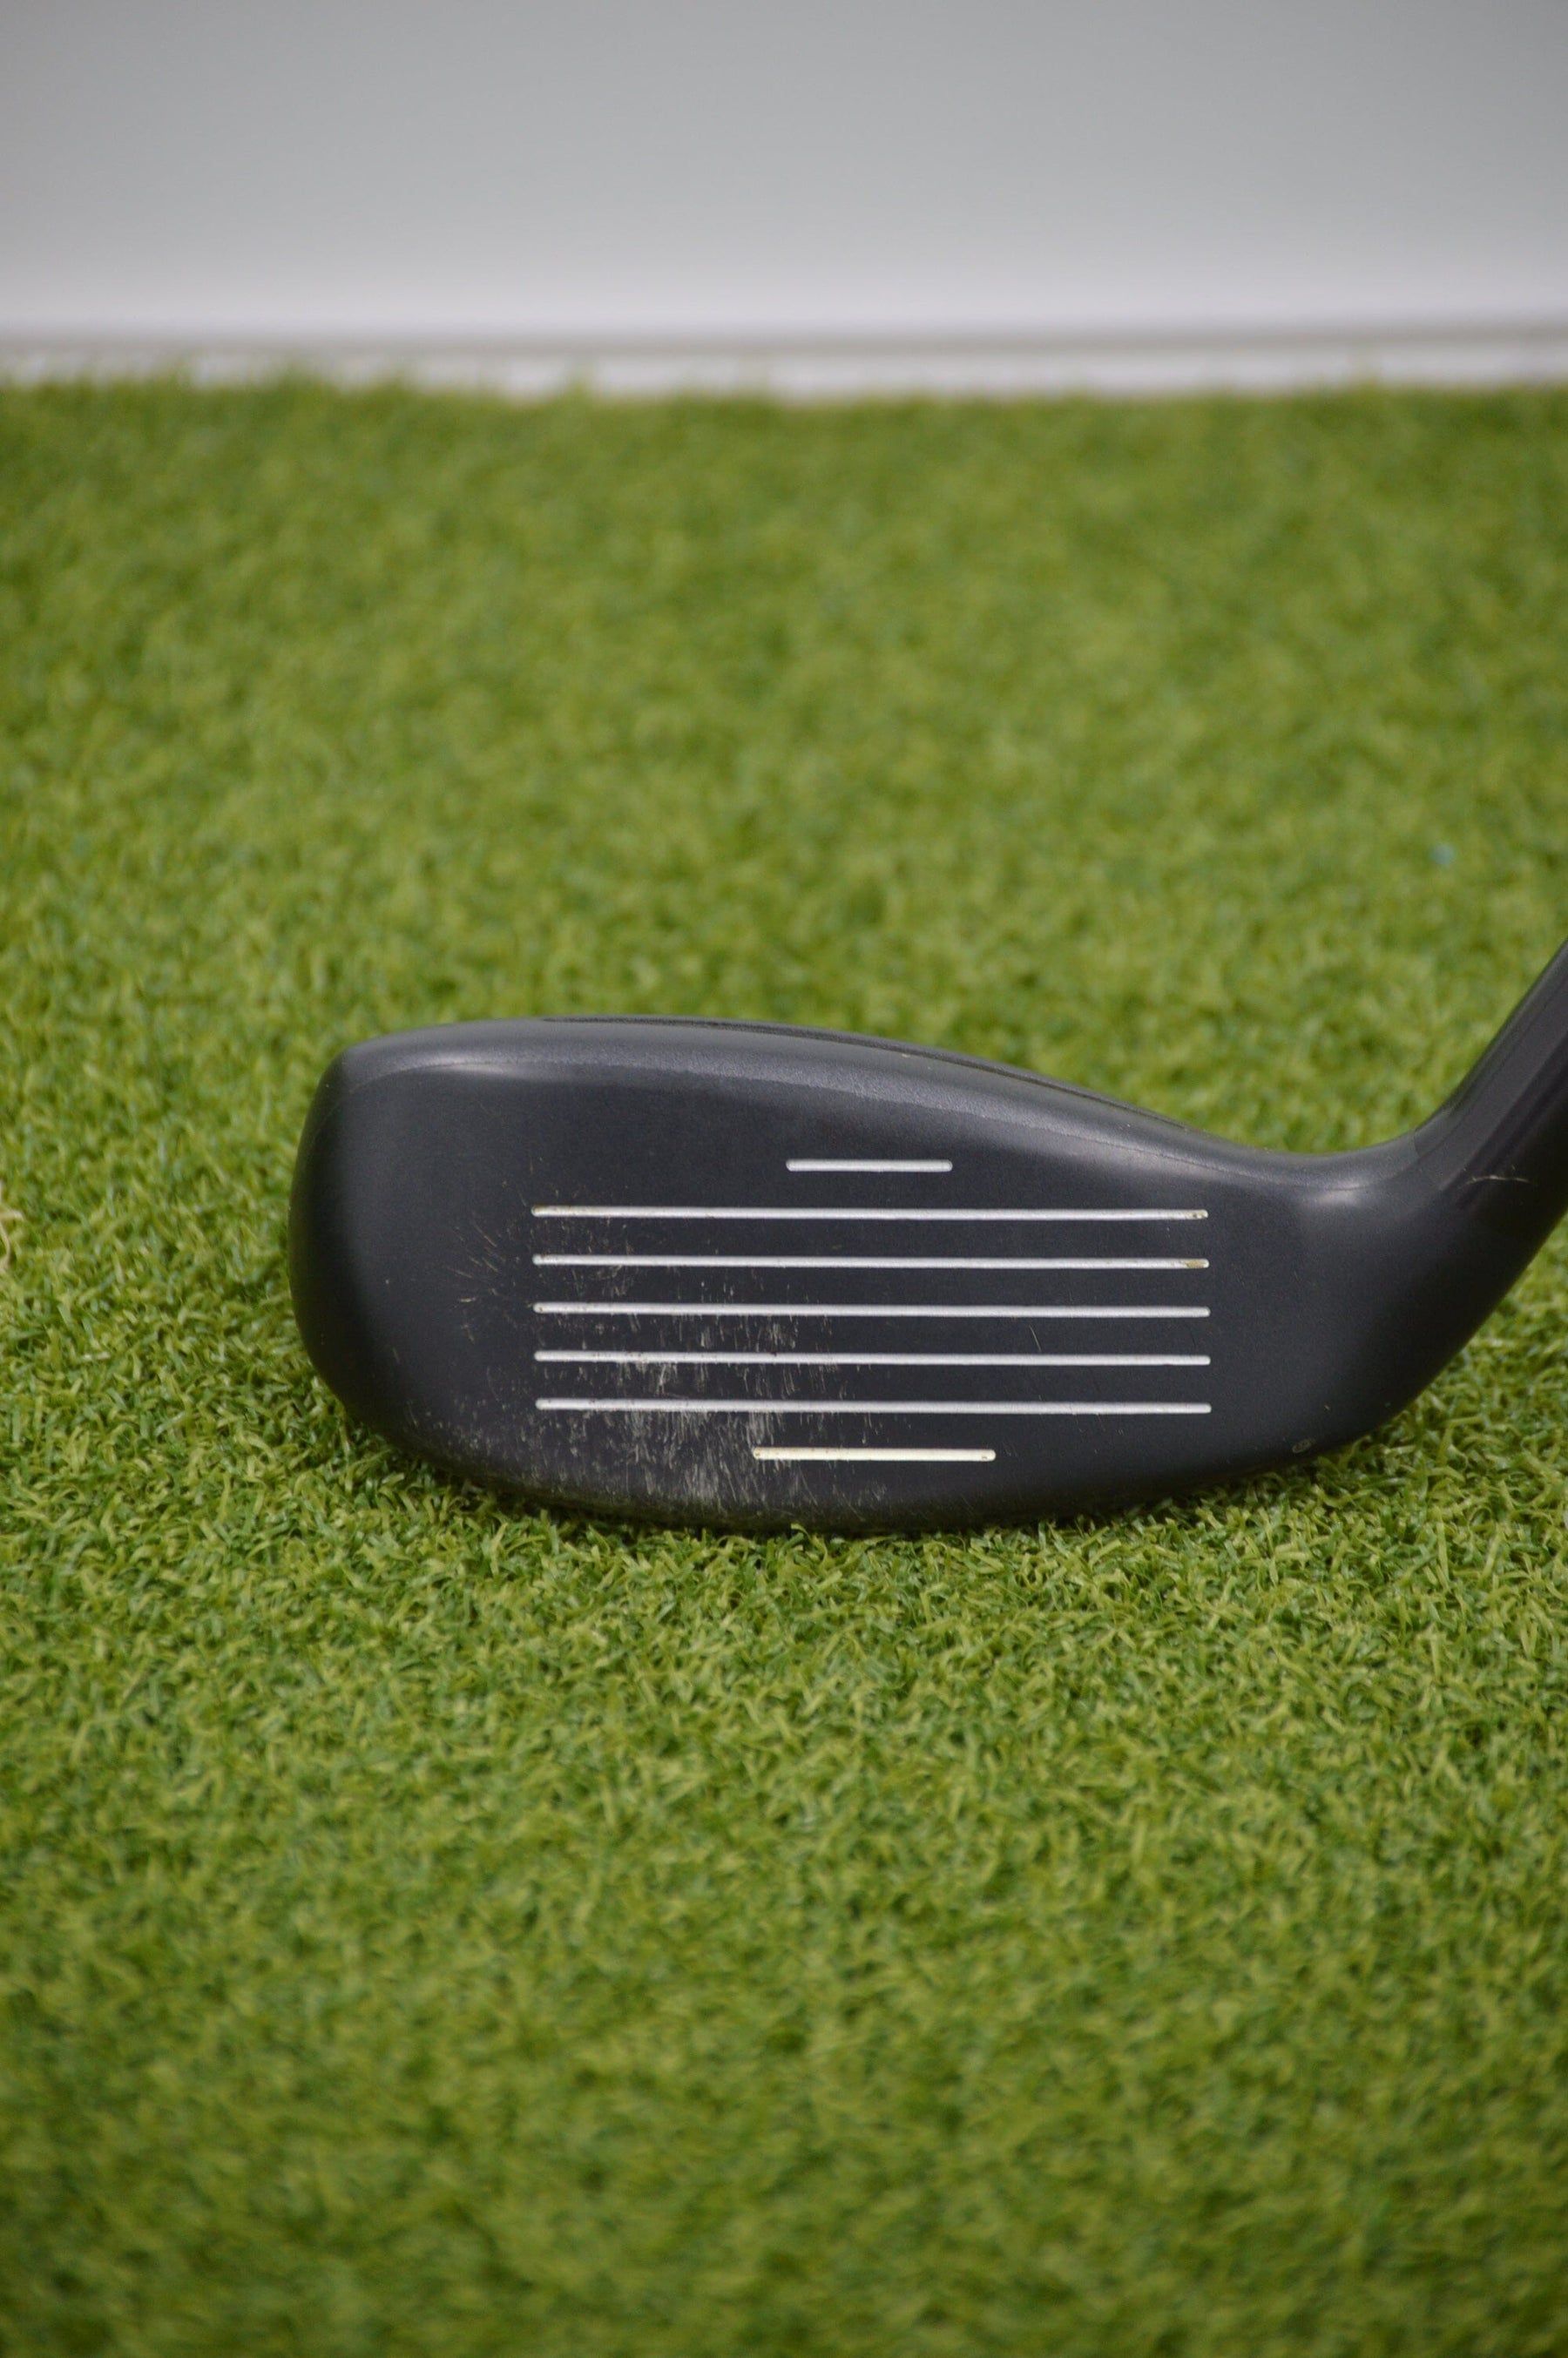 Adams Pro 23 Degree Hybrid S Flex Golf Clubs GolfRoots 